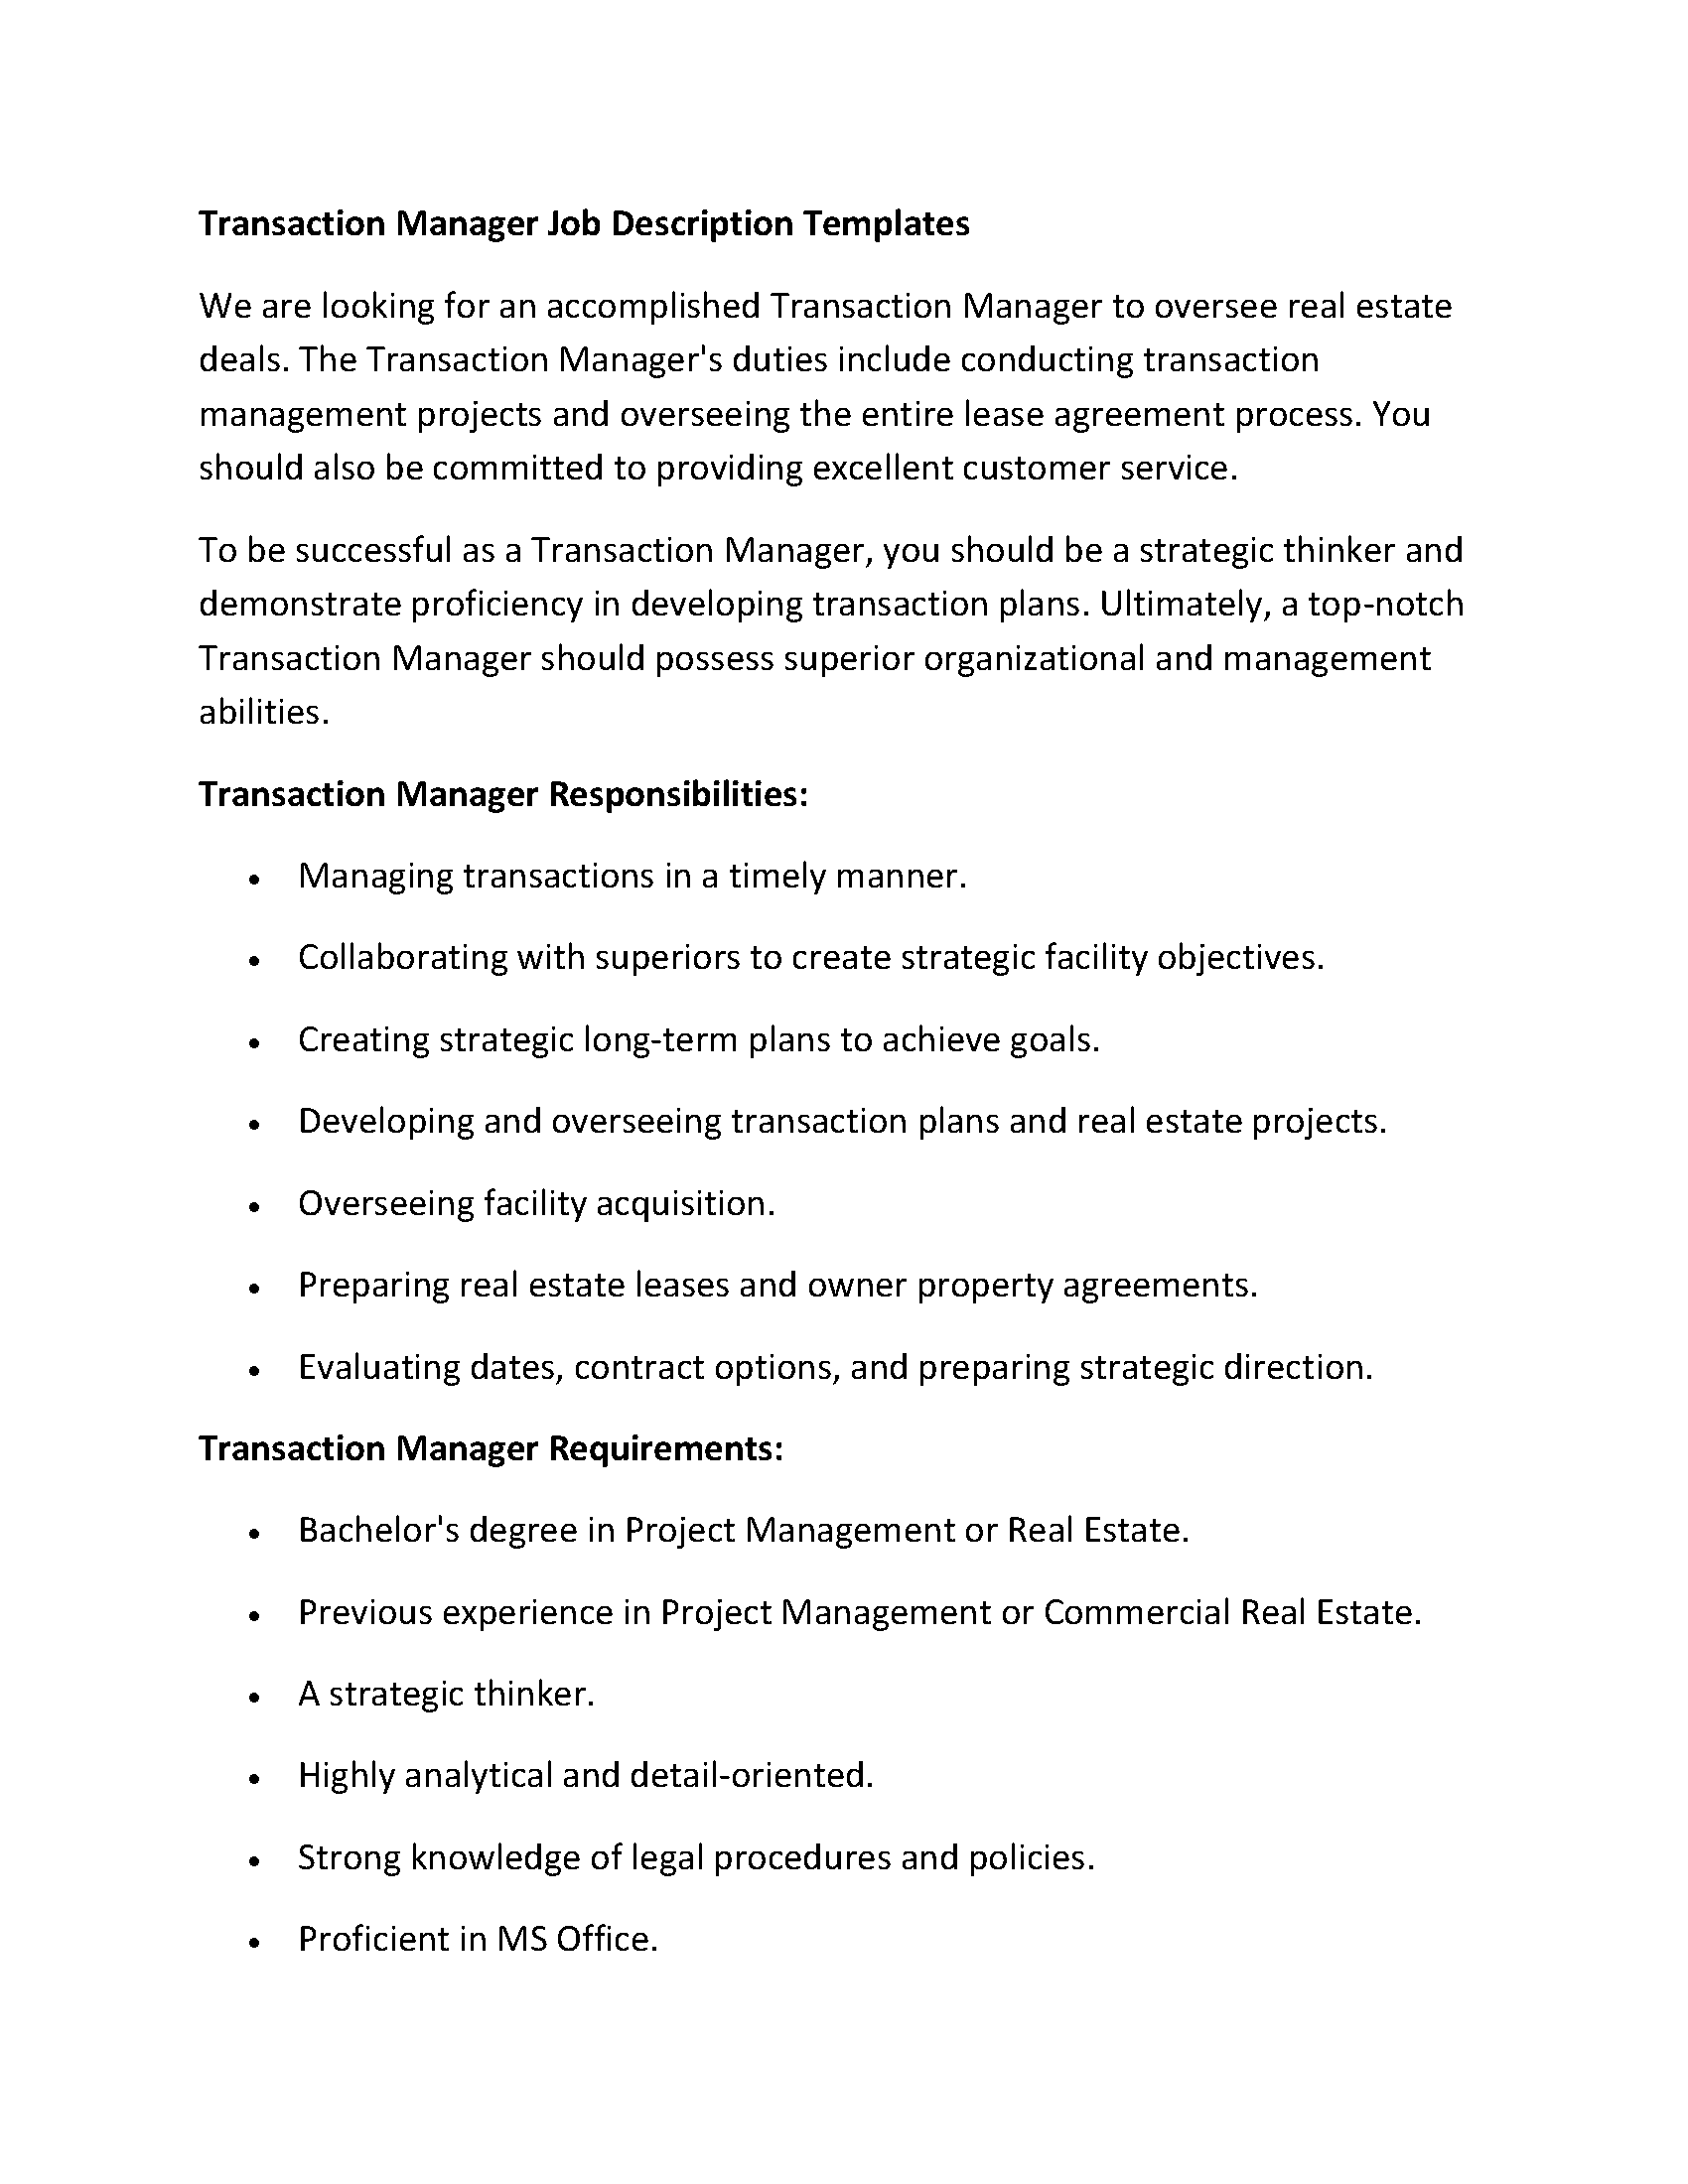 Transaction Manager Job Description Templates